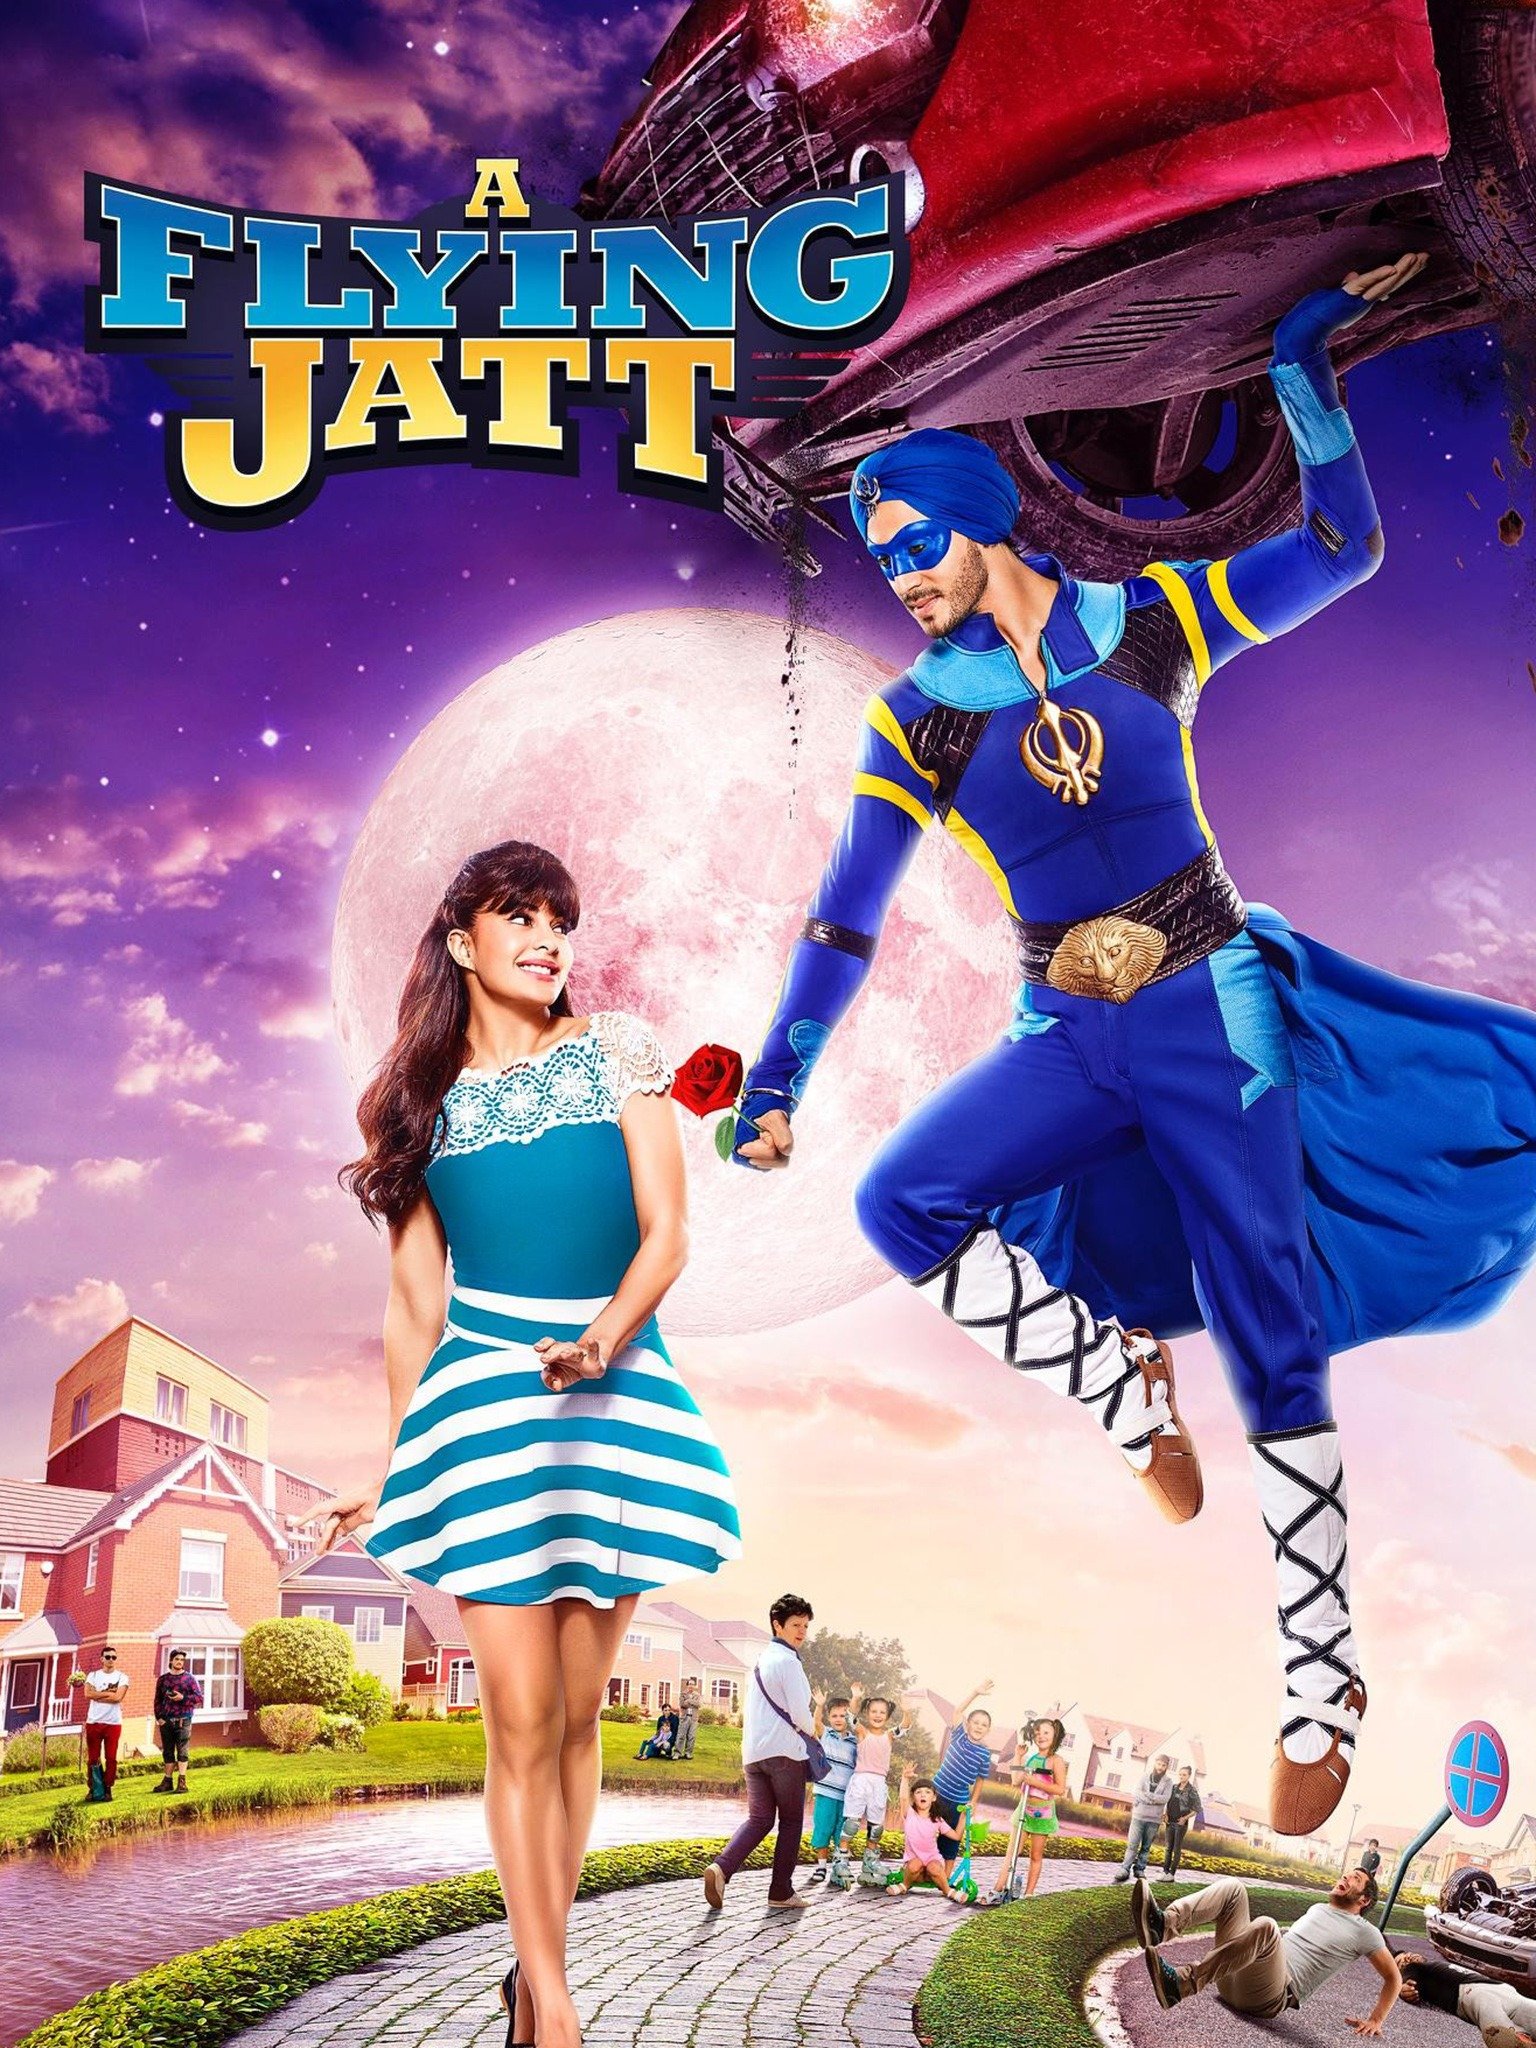 Flying Jatt: Trailer 1 - Trailers & Videos - Rotten Tomatoes